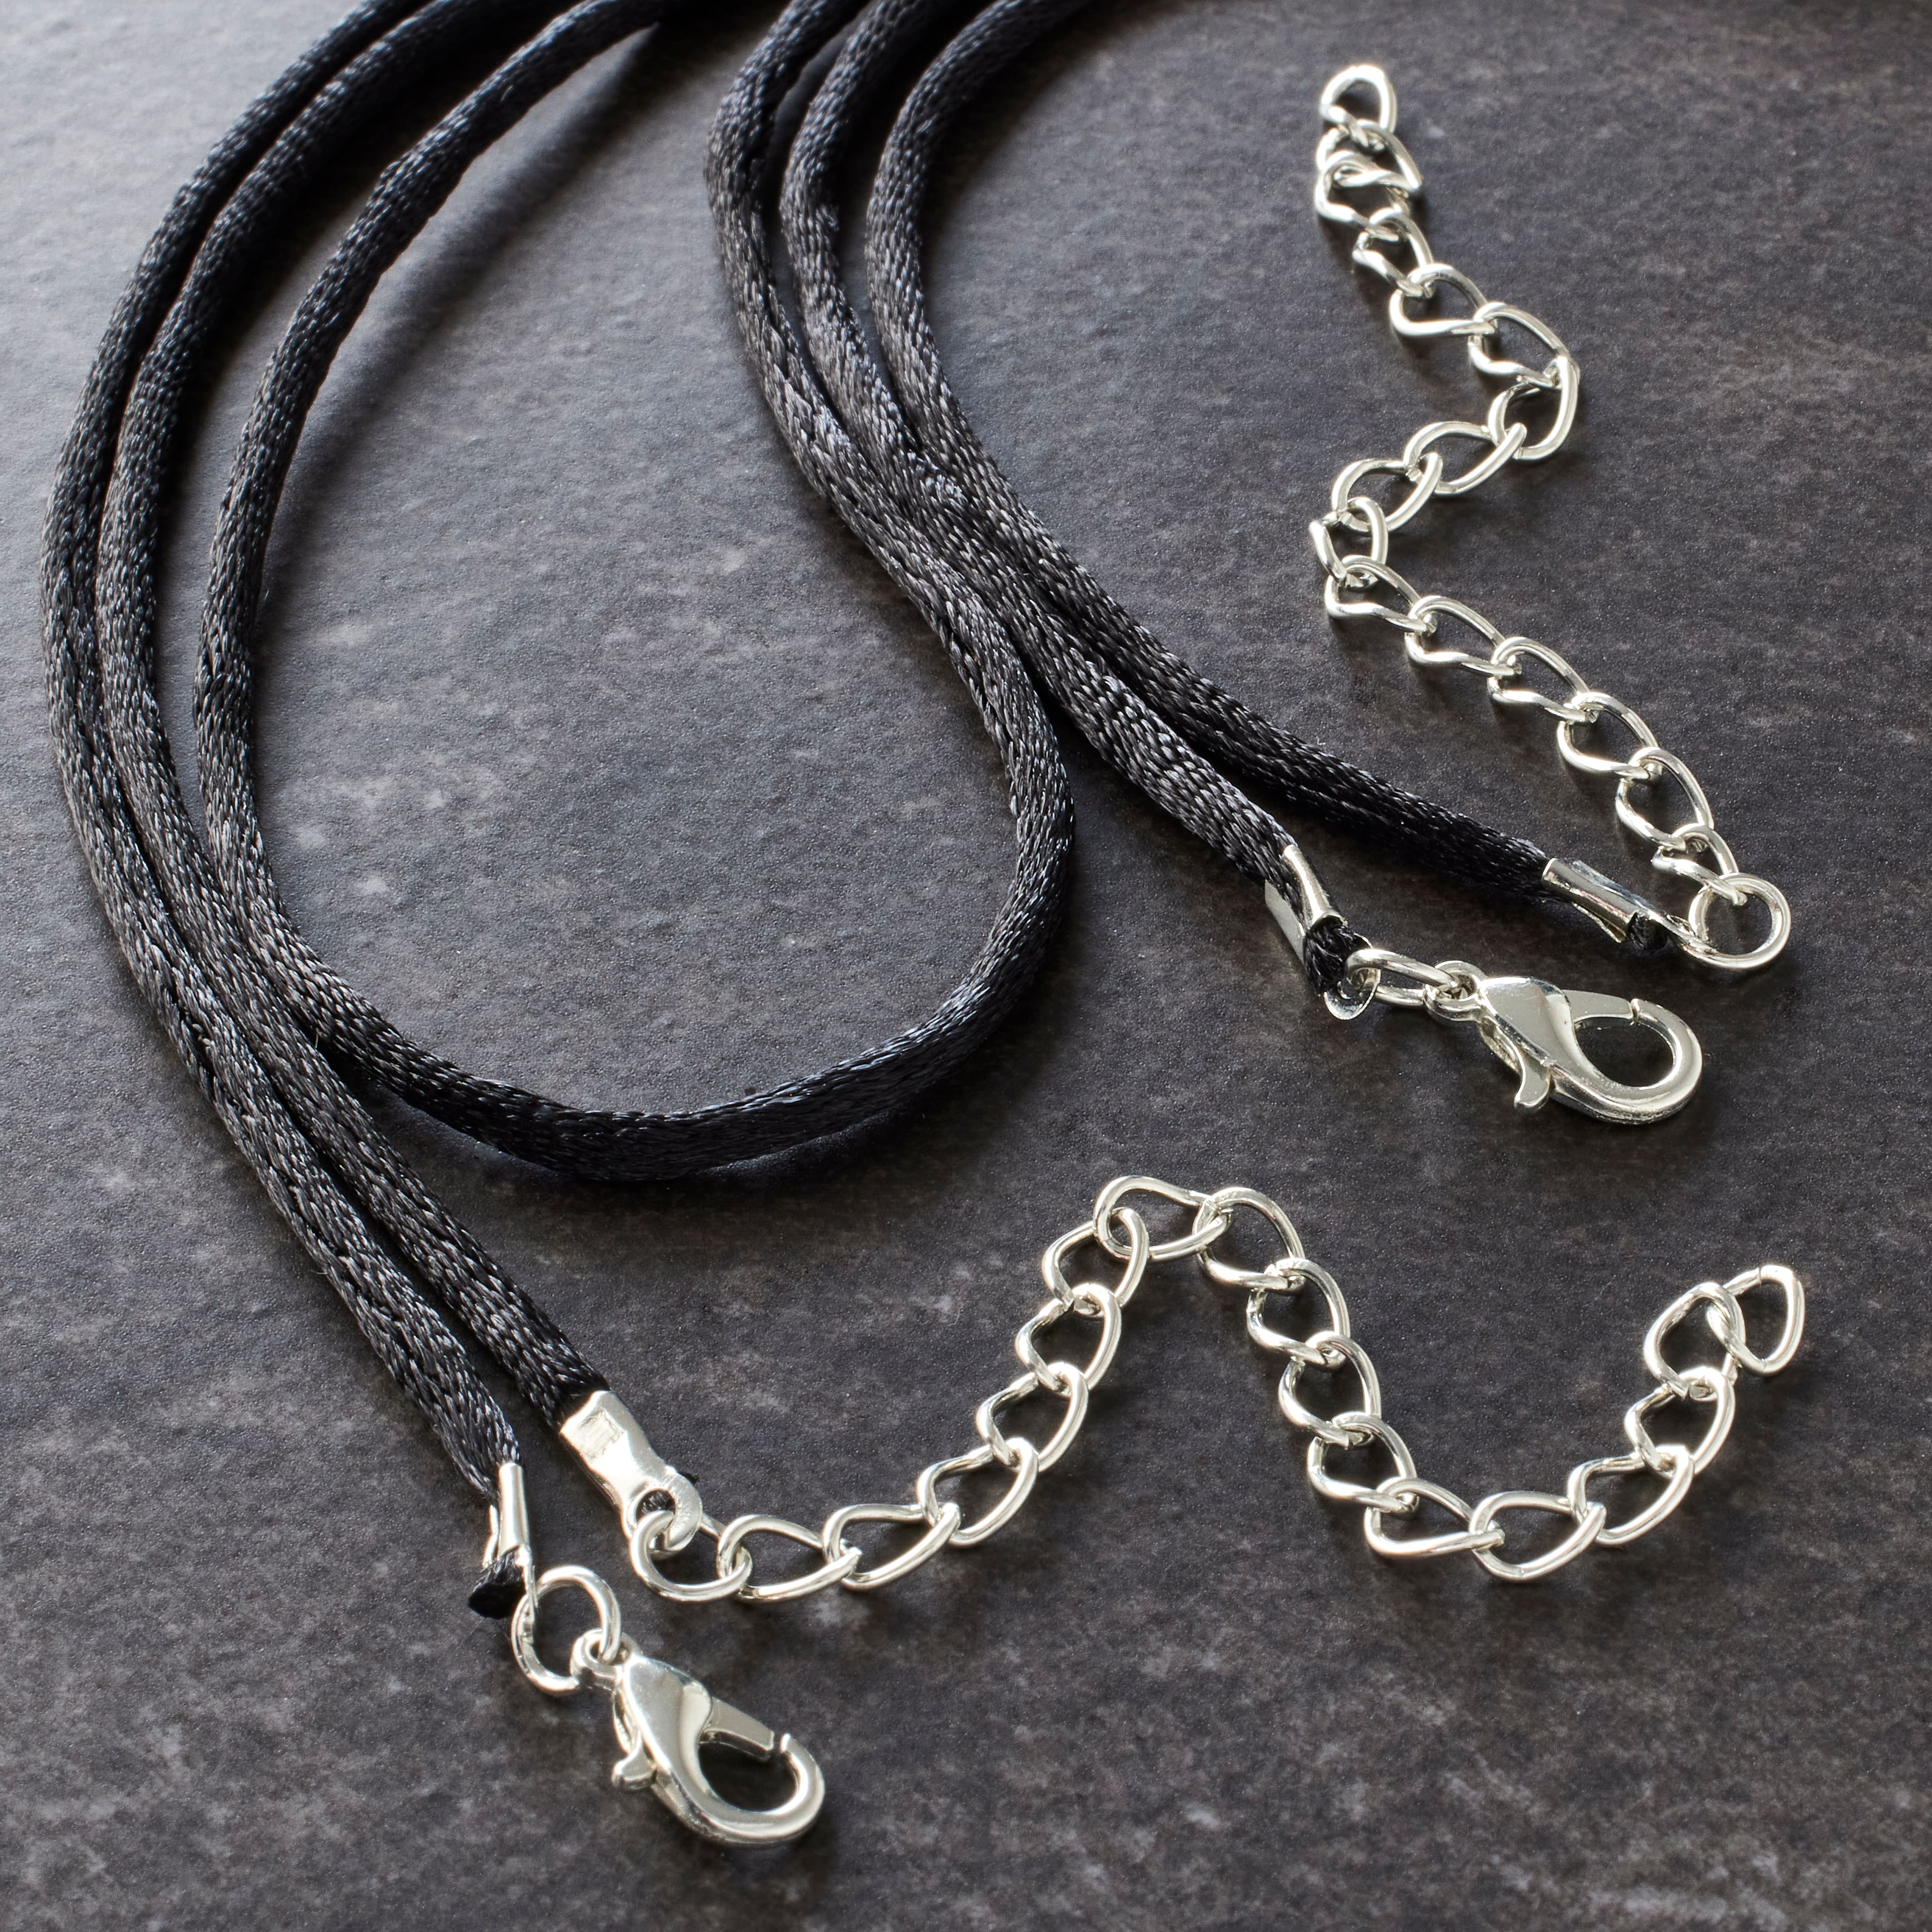 Bead Landing Black Nylon Cording Necklace - Each